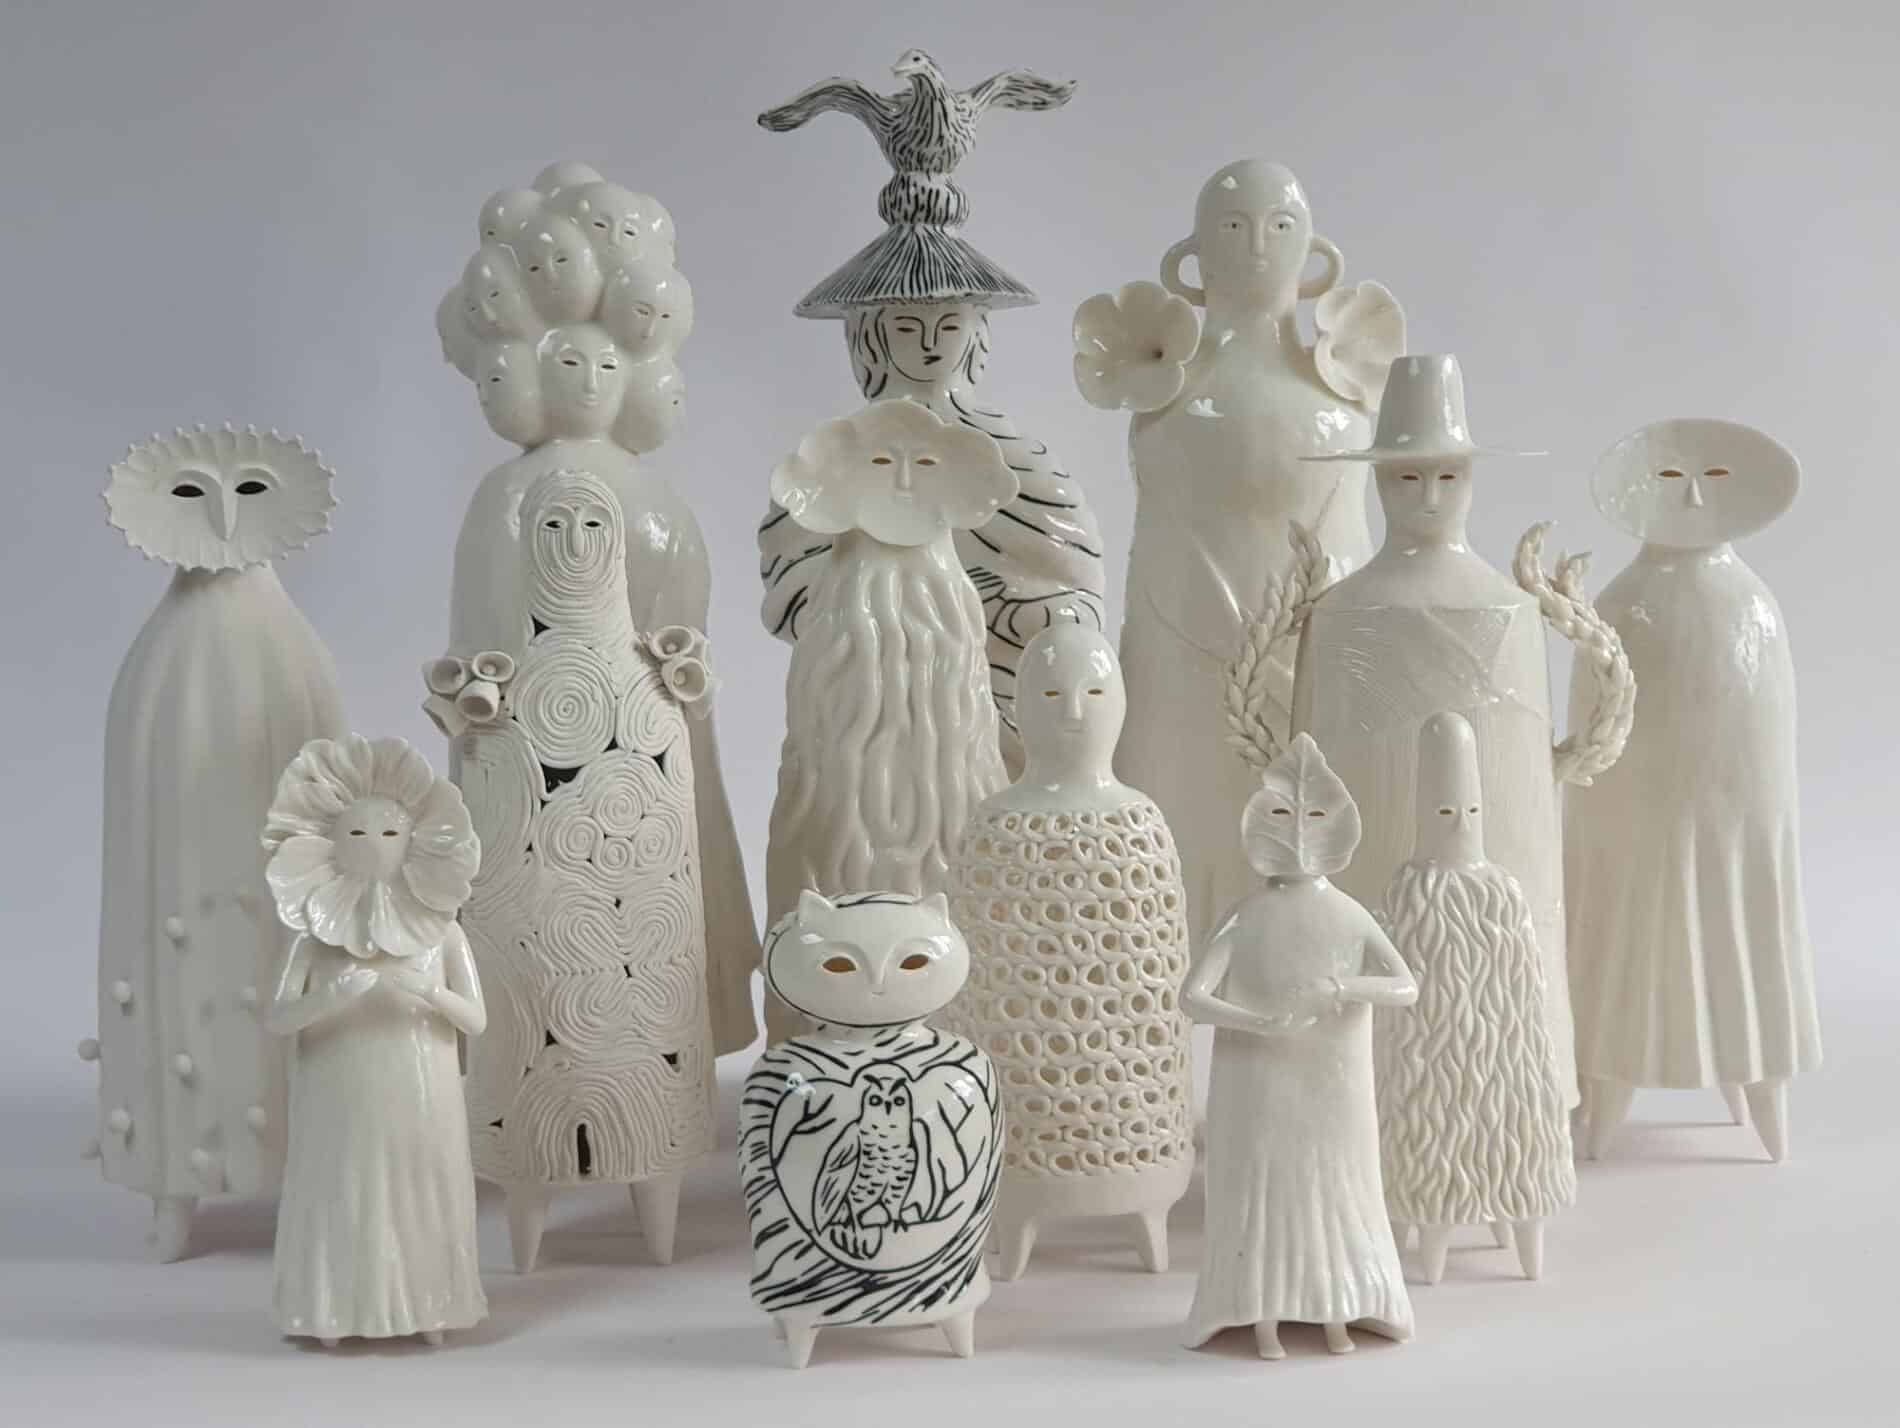 sophie woodrow escultura de personajes en ceramica